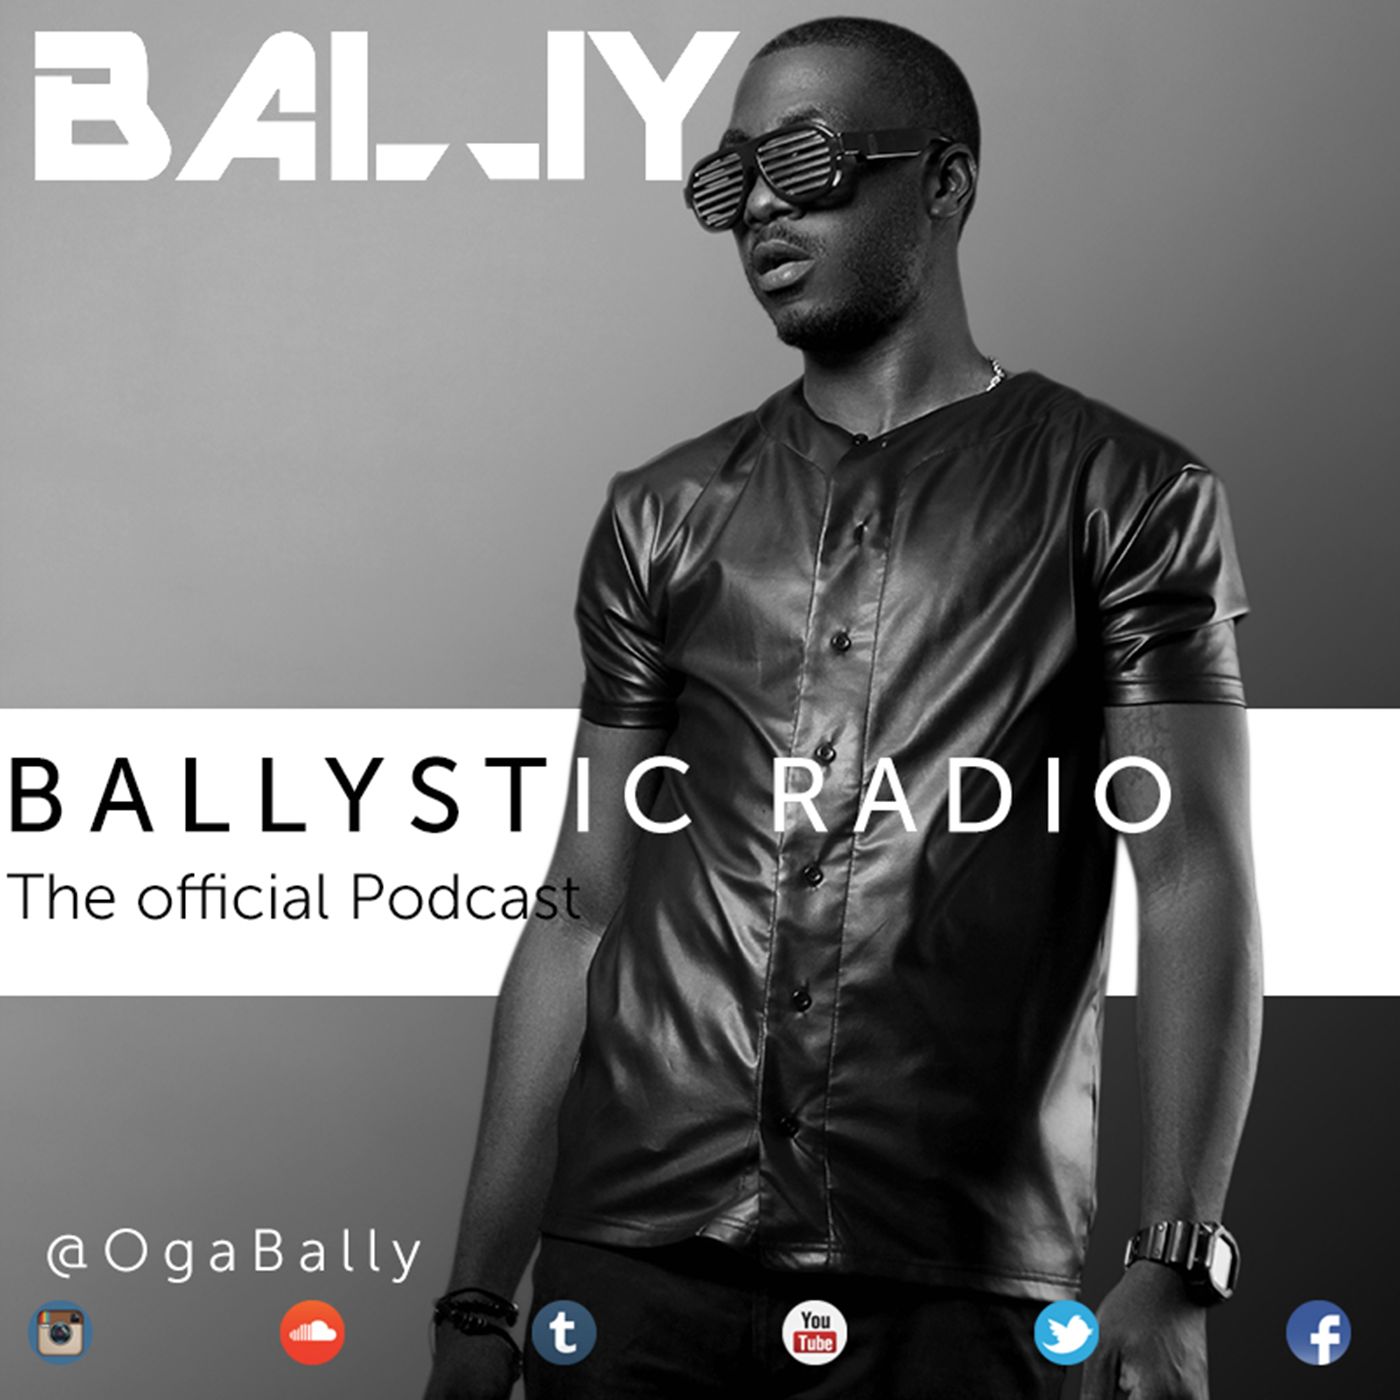 Ballstic Radio